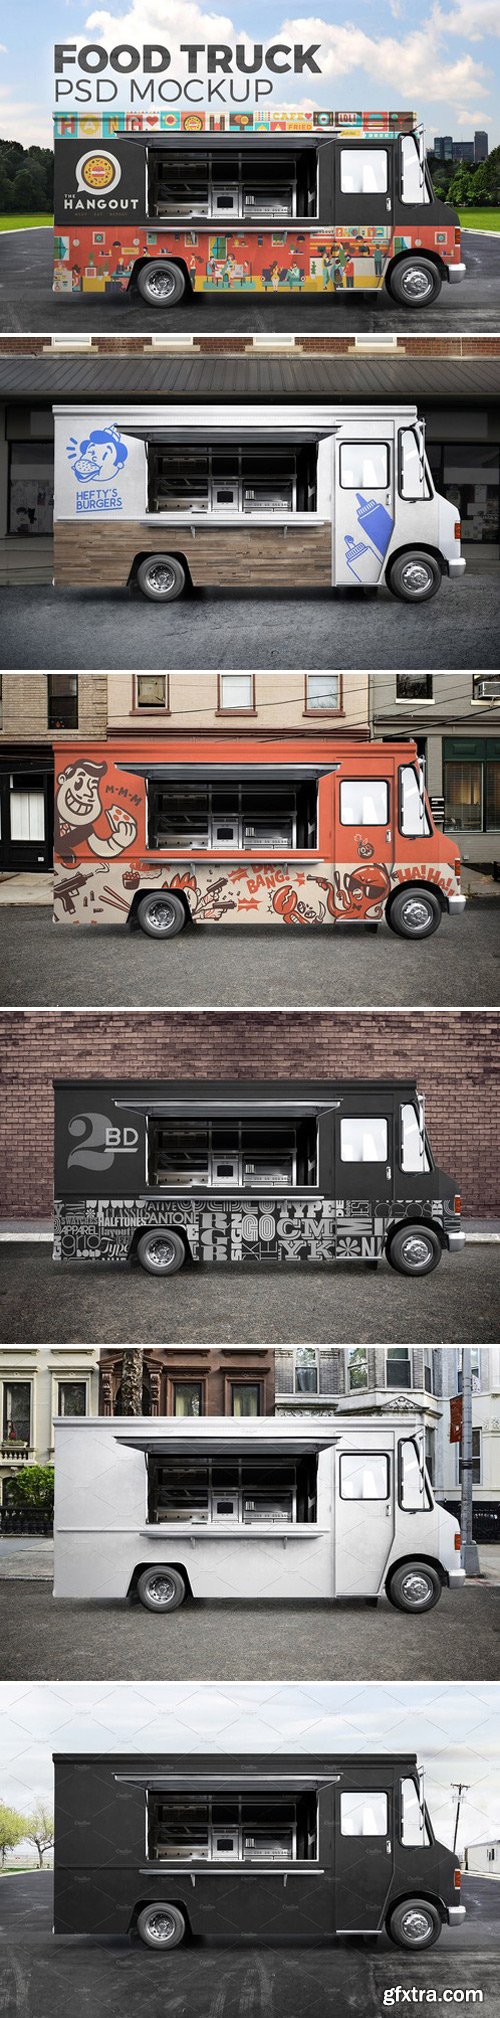 CM - Food truck. PSD Mockup 1266314